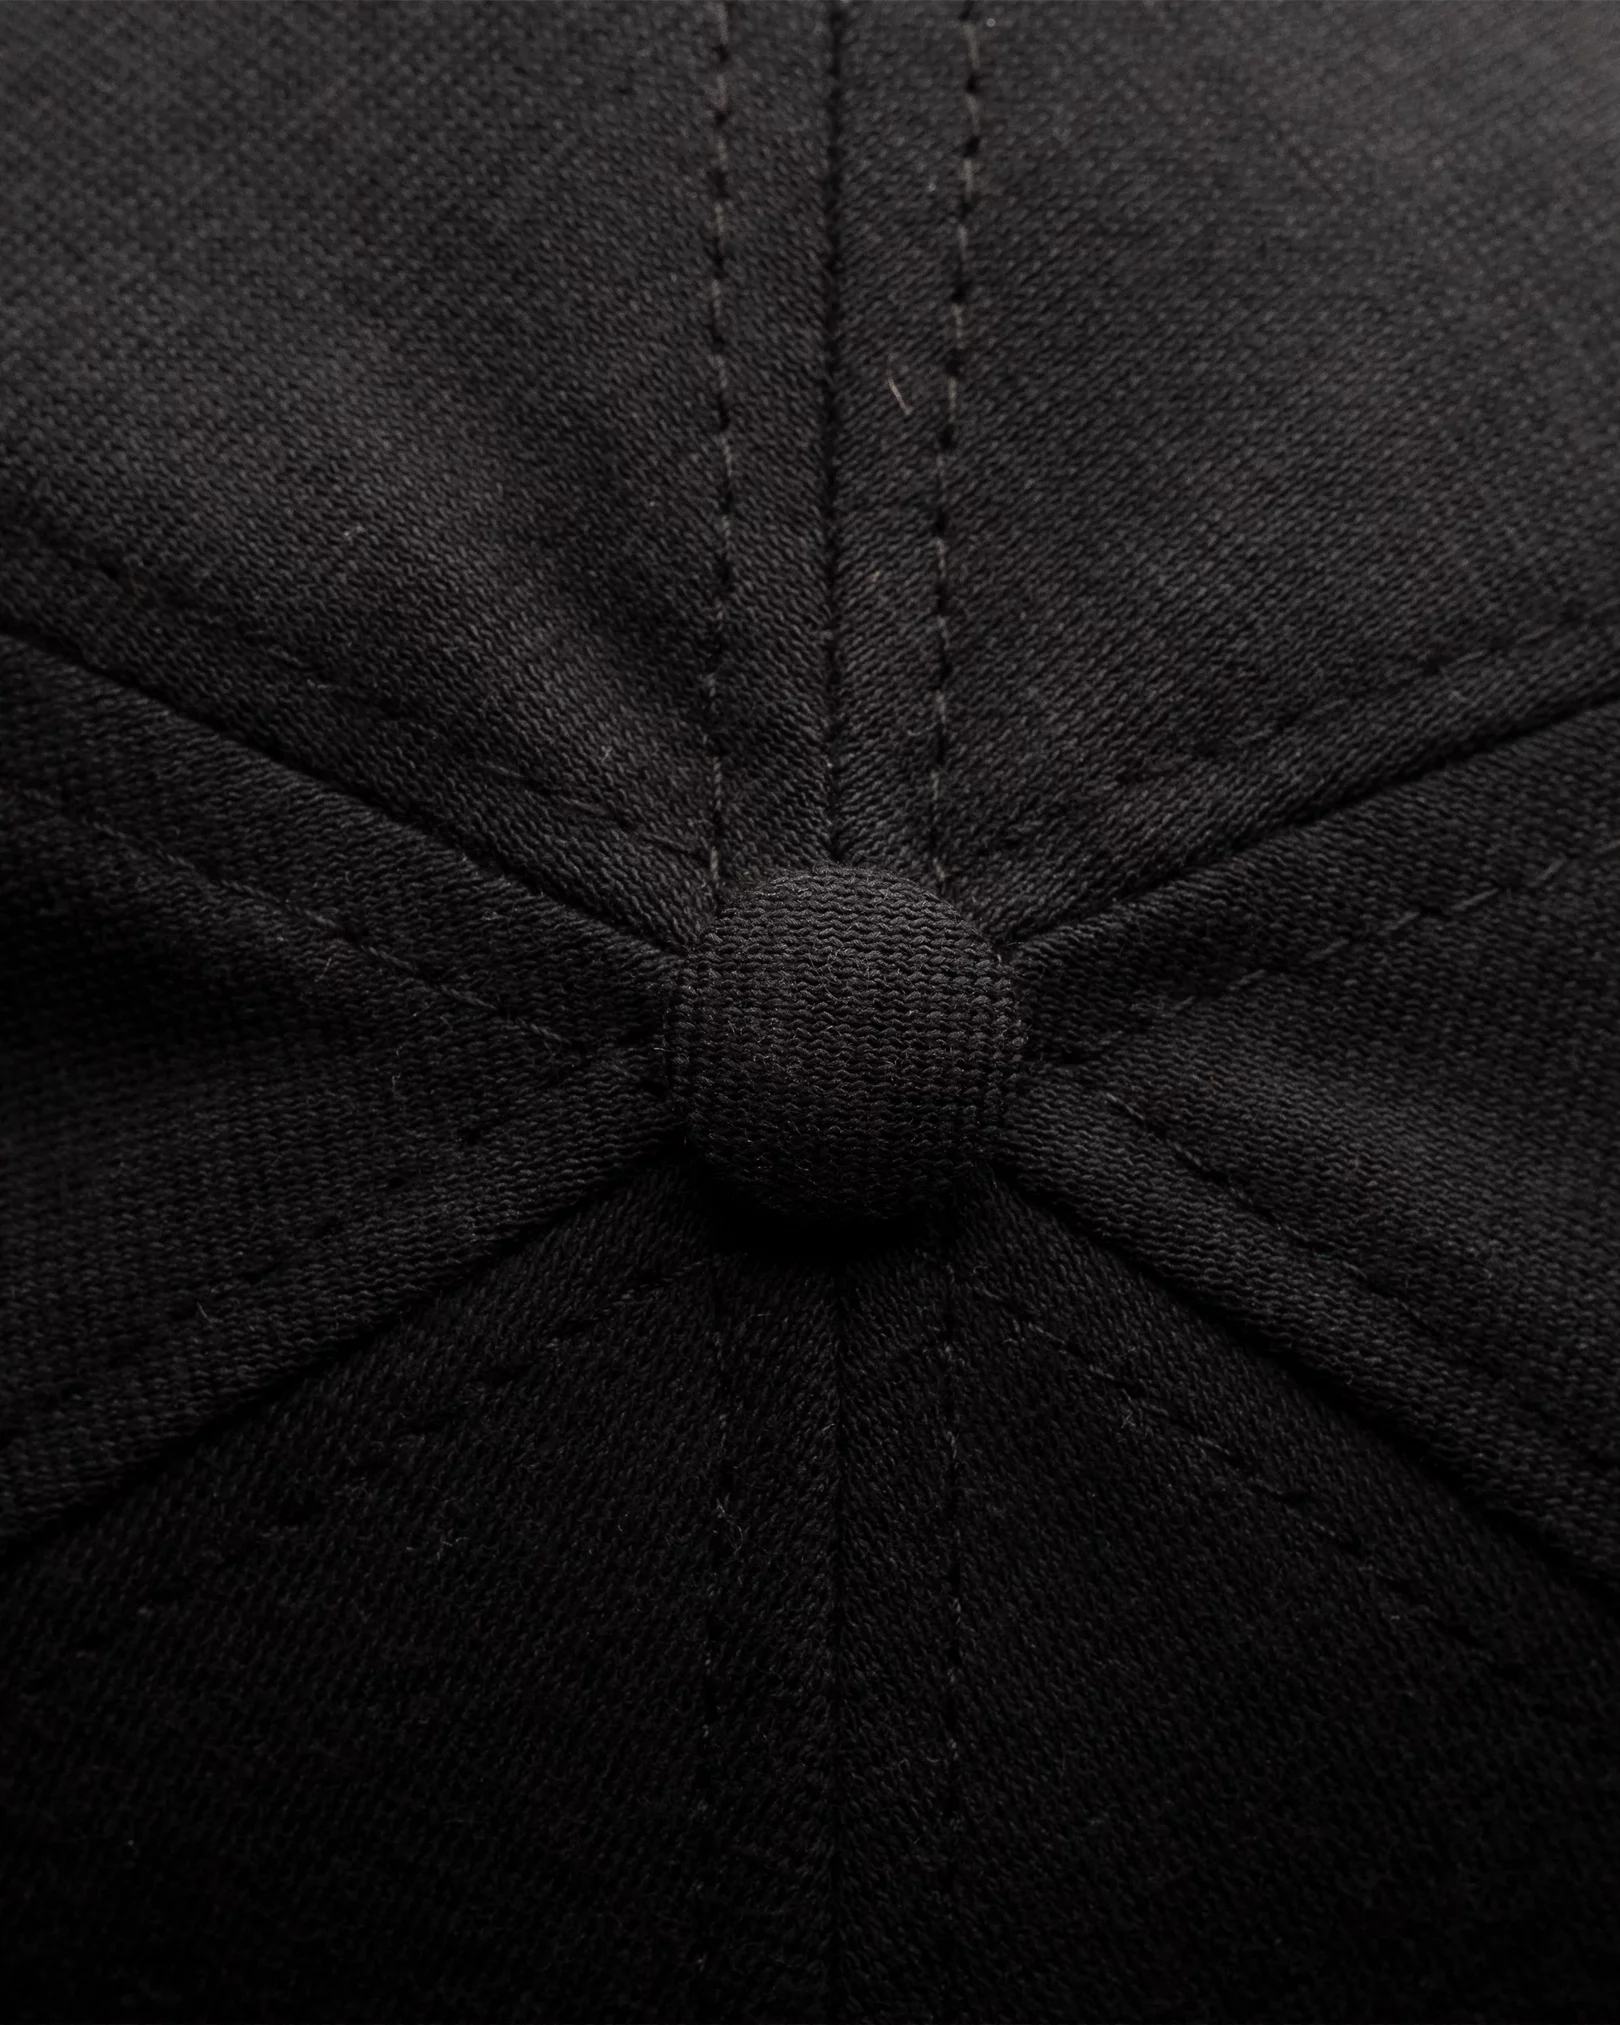 Eton - classic black baseball cap